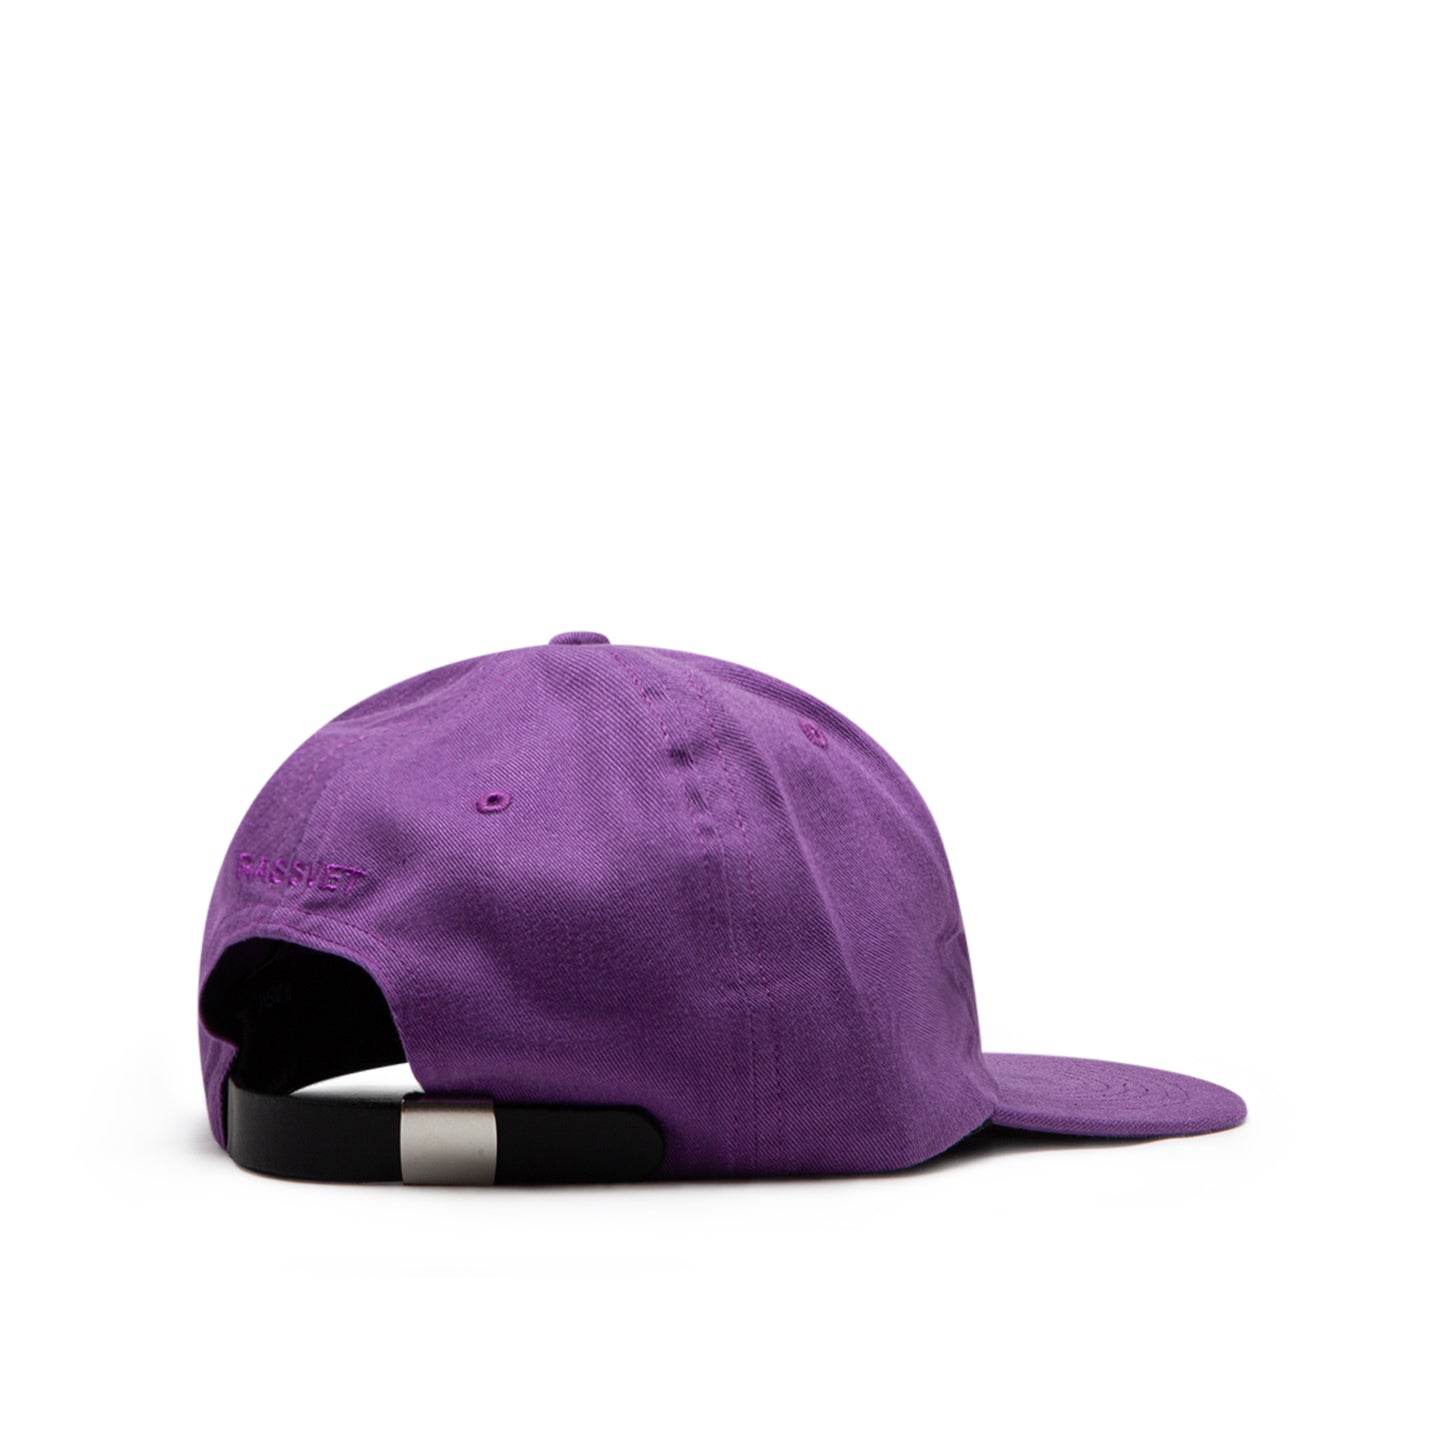 rassvet 5-panel logo cap (purple)